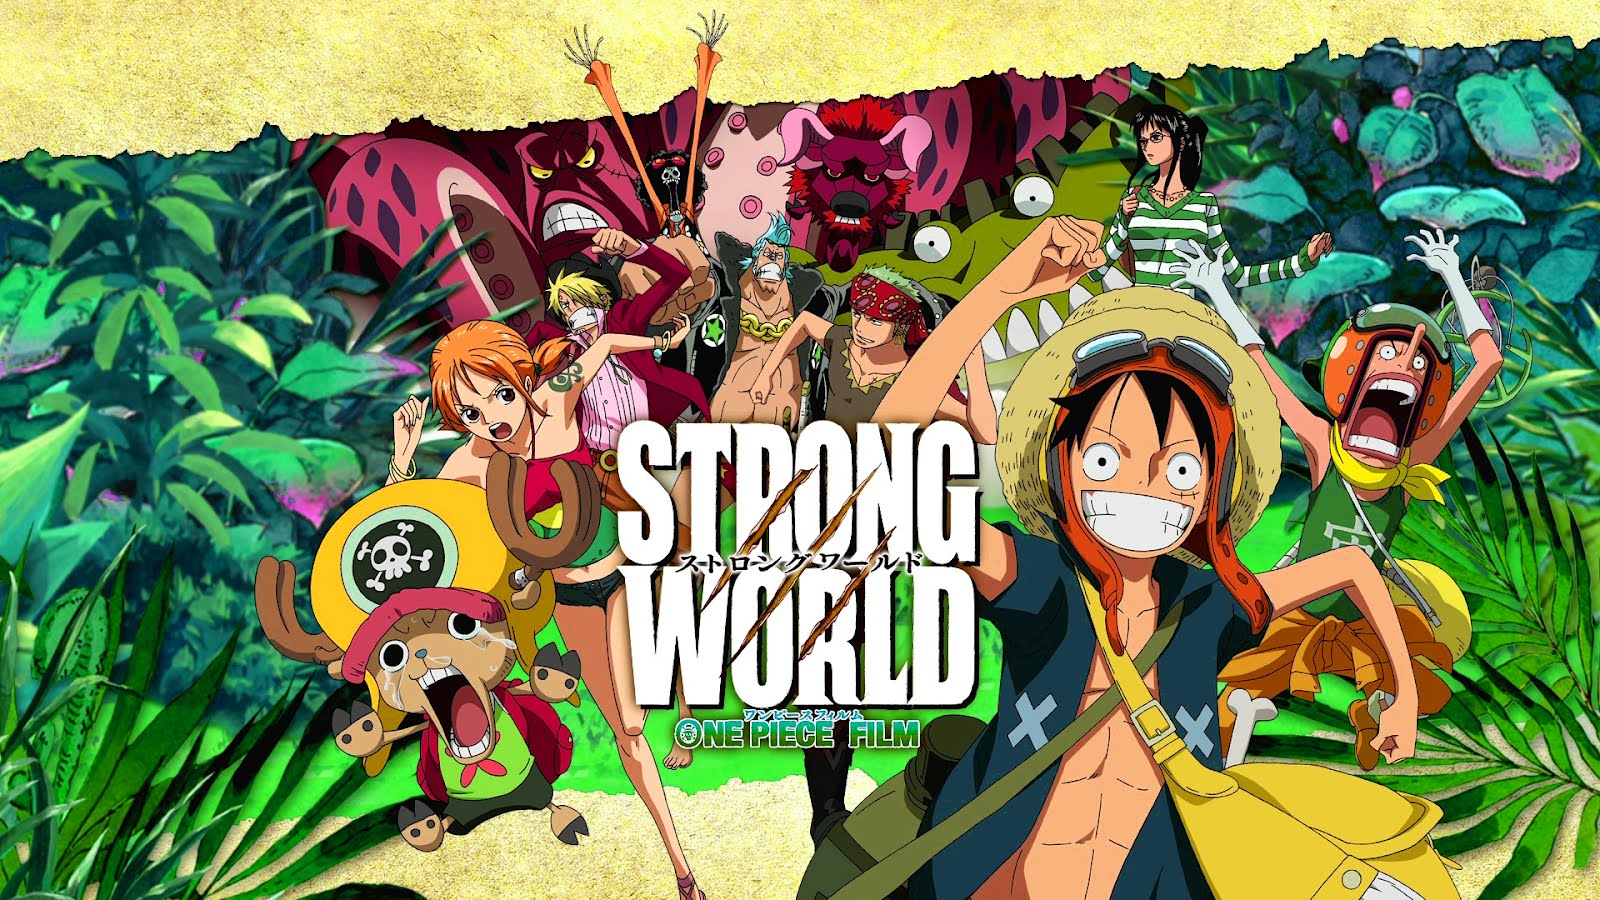  one Piece Crew Onepiece Strong World Luffy One Piece Nami One piece